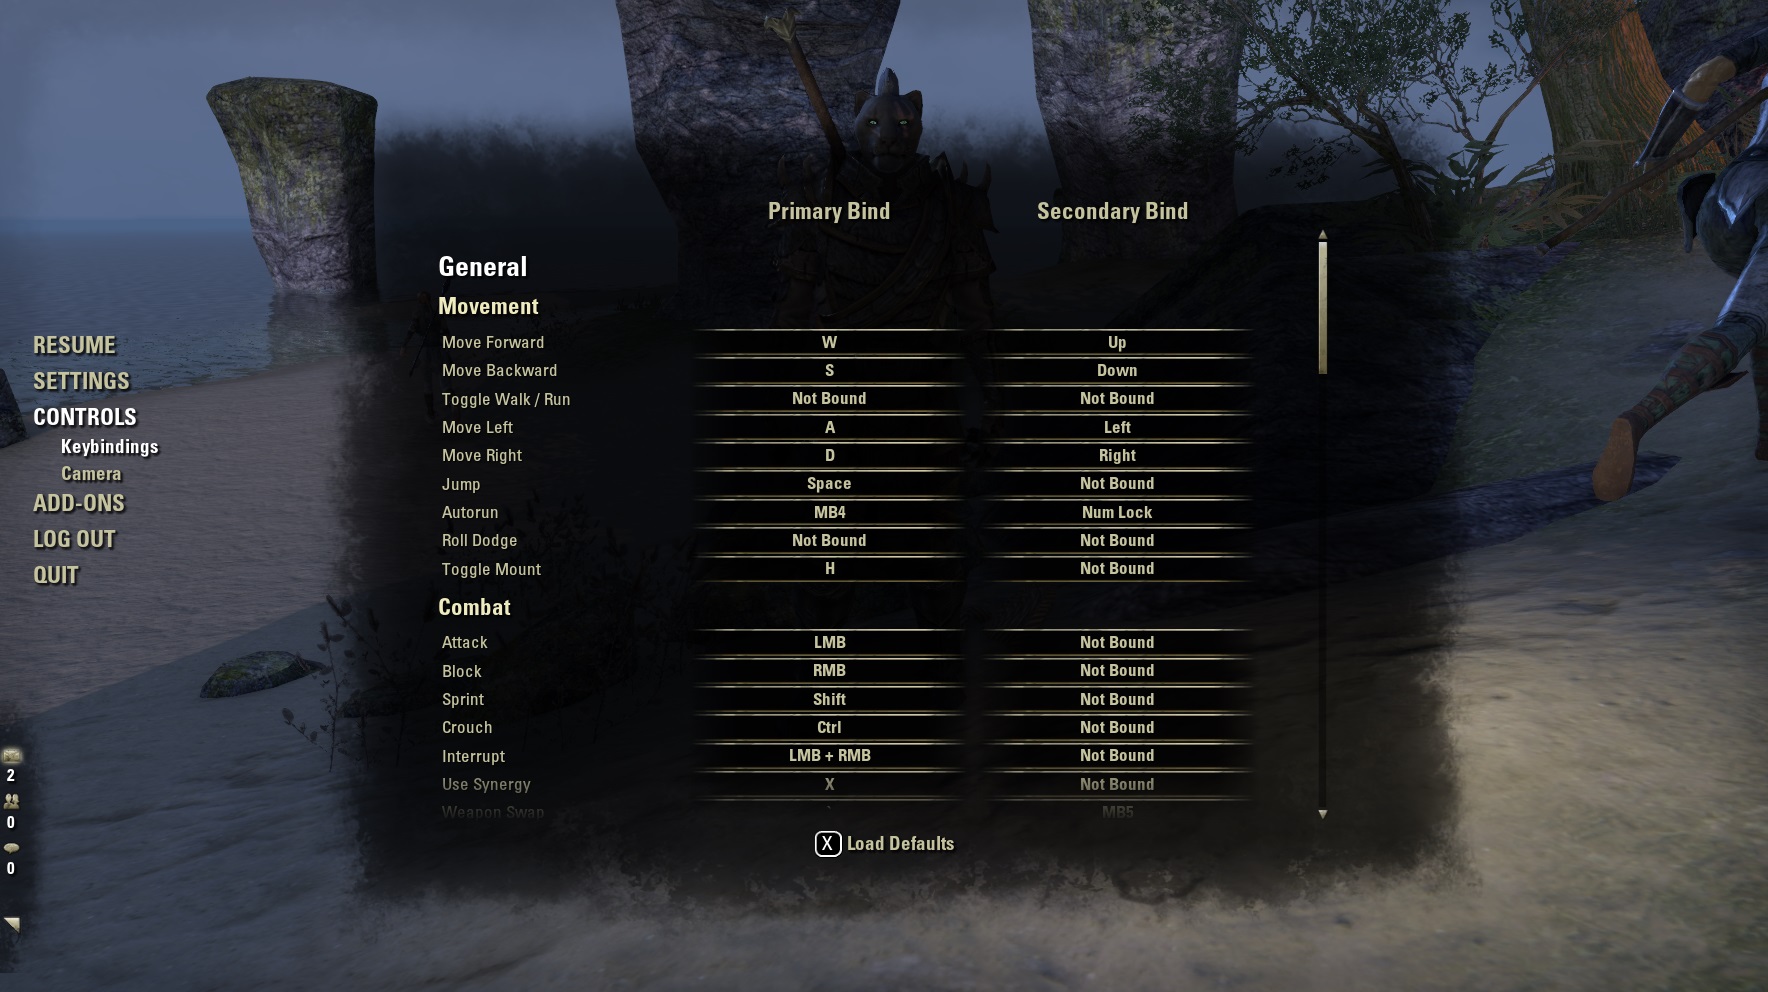 Guide to Combat Basics in the Elder Scrolls Online